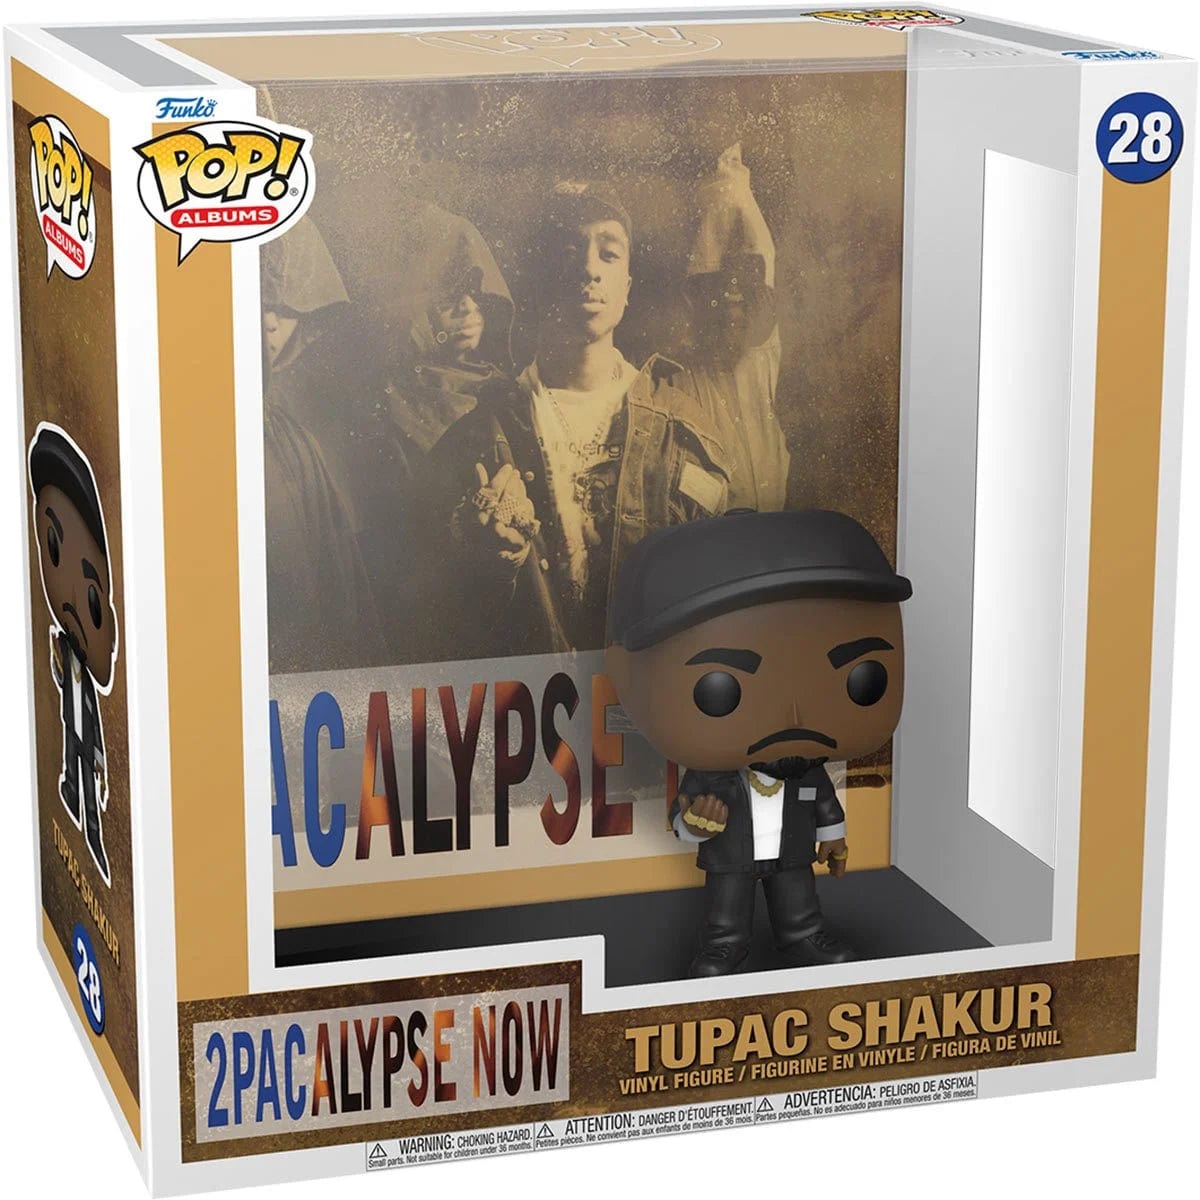 Funko Tupac 2pacalypse Now Pop! Album Figure with Case